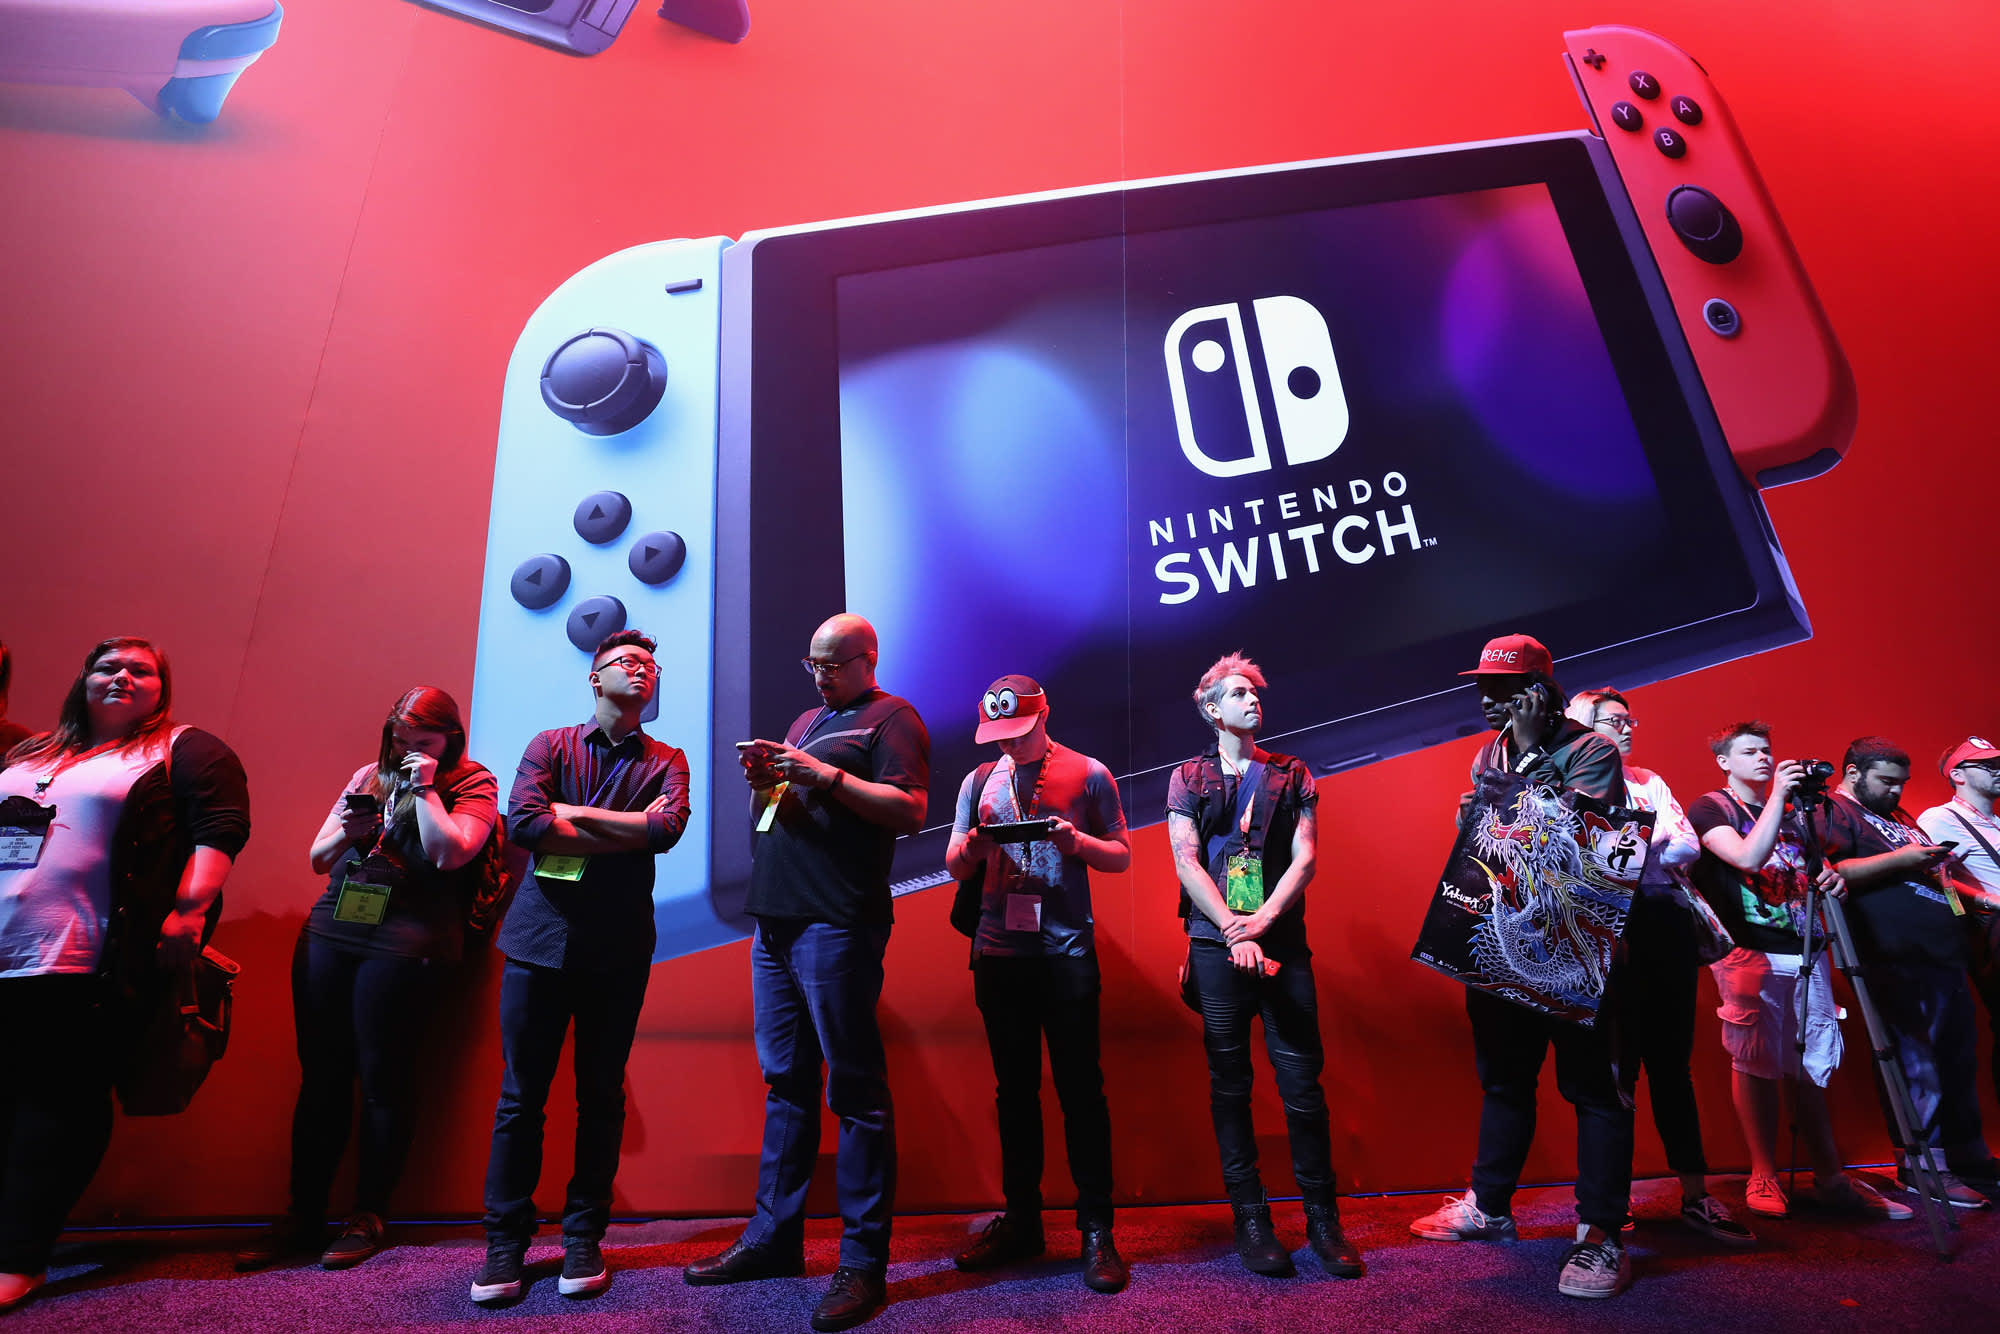 Nintendo Switch sells 10 million units